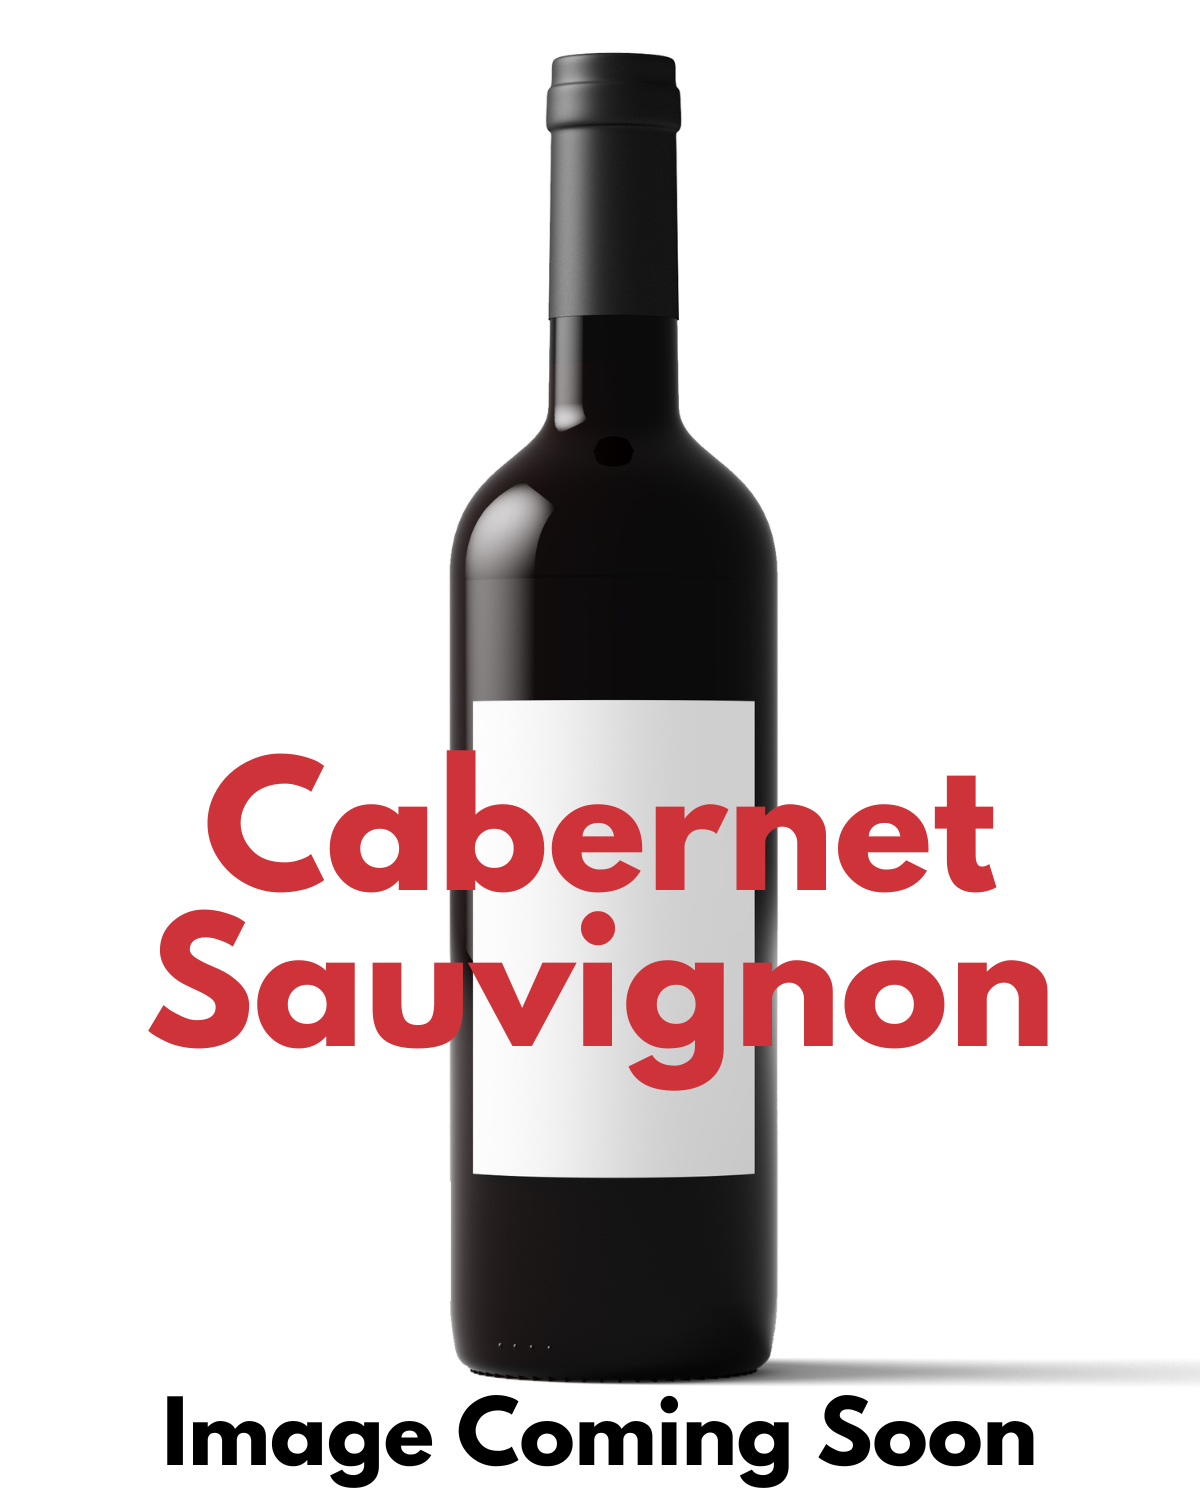 Product Image for Cabernet Sauvignon